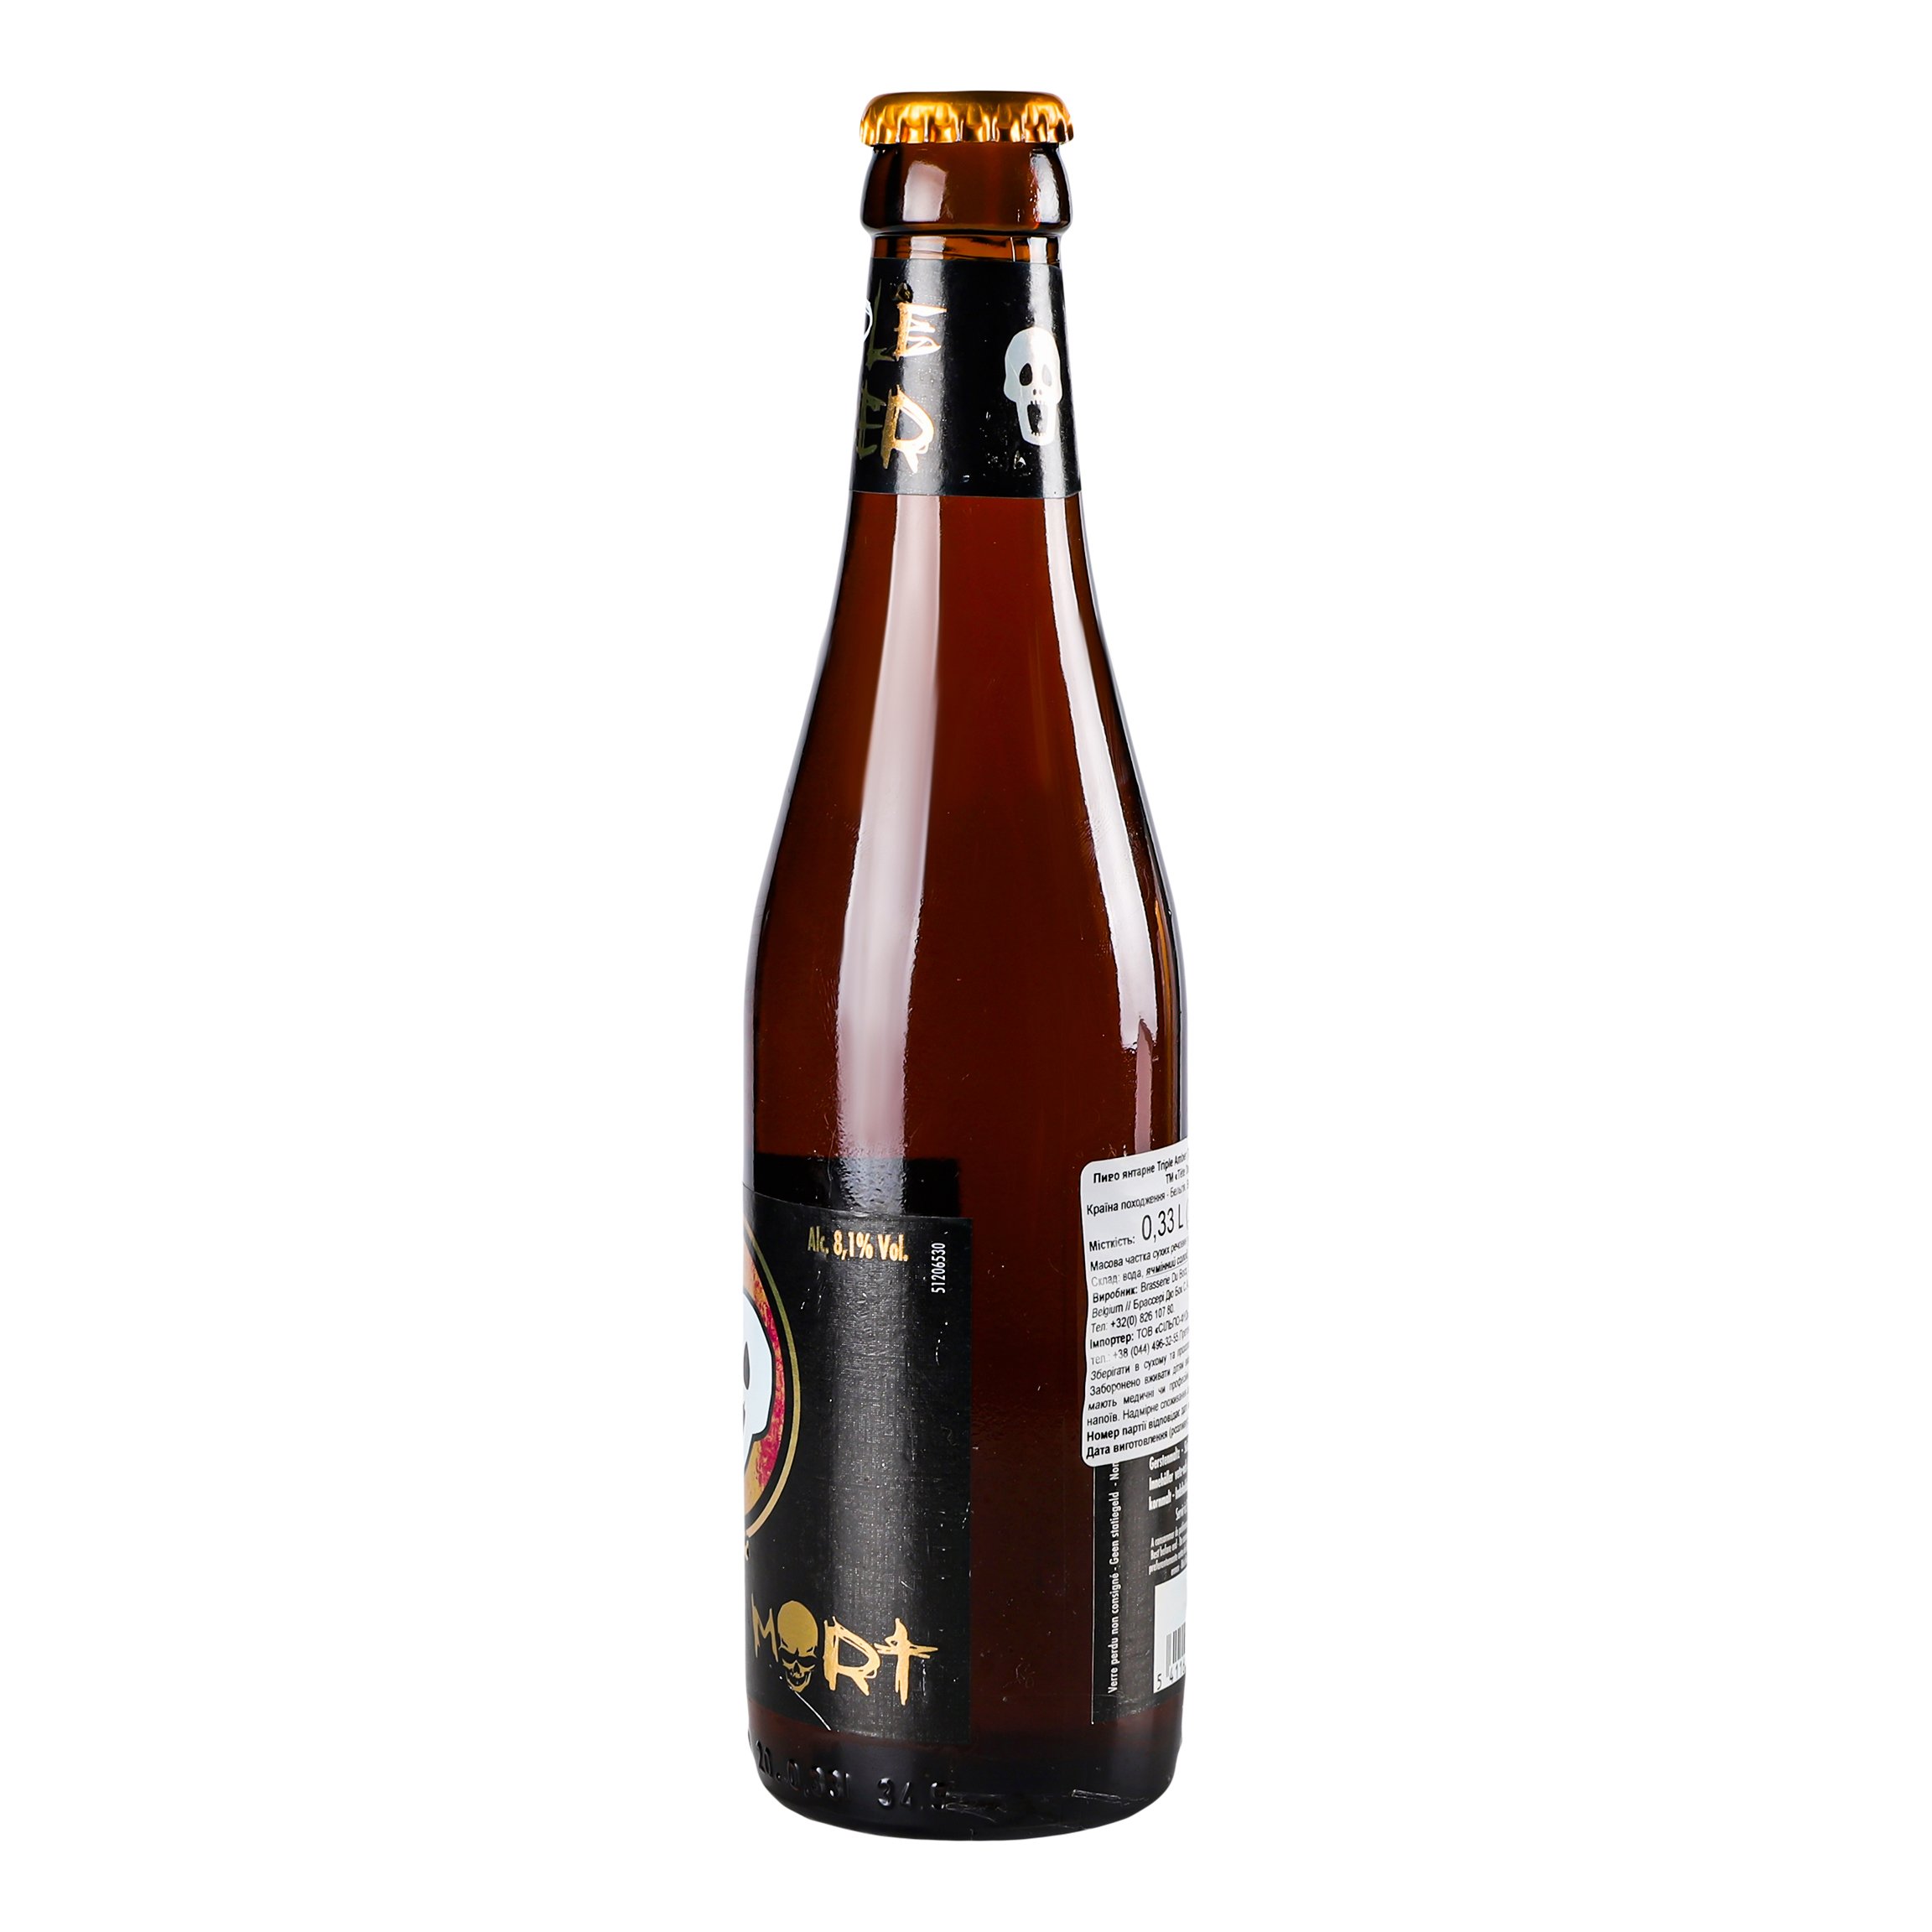 Пиво Tete de Mort Triple Amber, янтарное, 8,1%, 0,33 л (885974) - фото 2